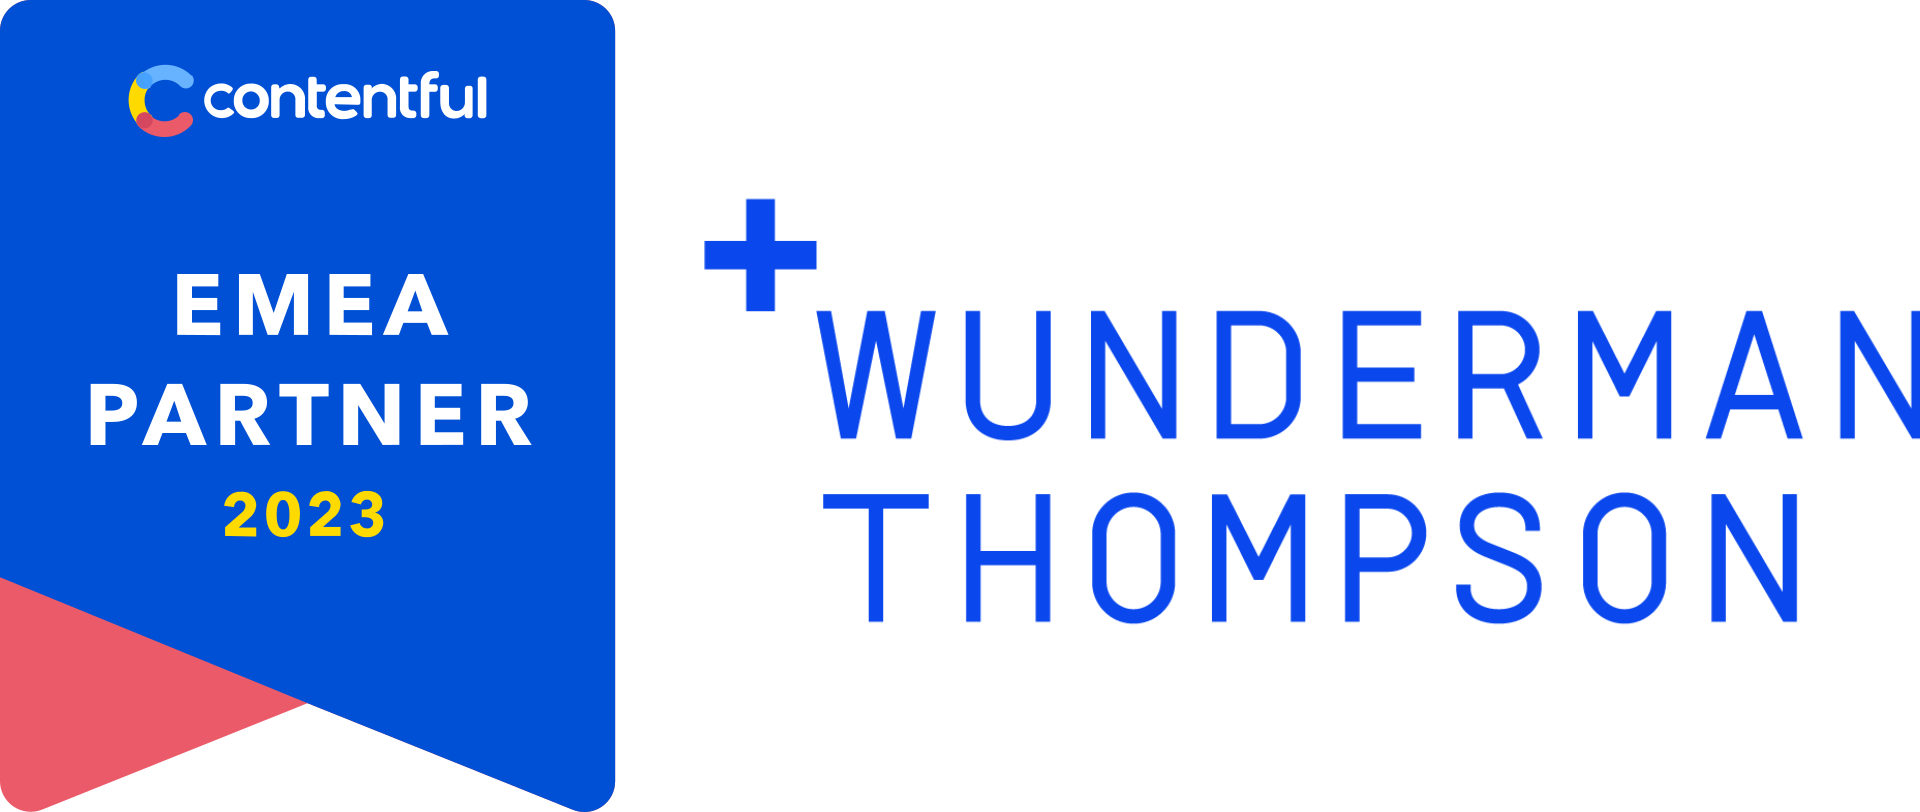 EMEA Partner 2023: Wunderman Thompson